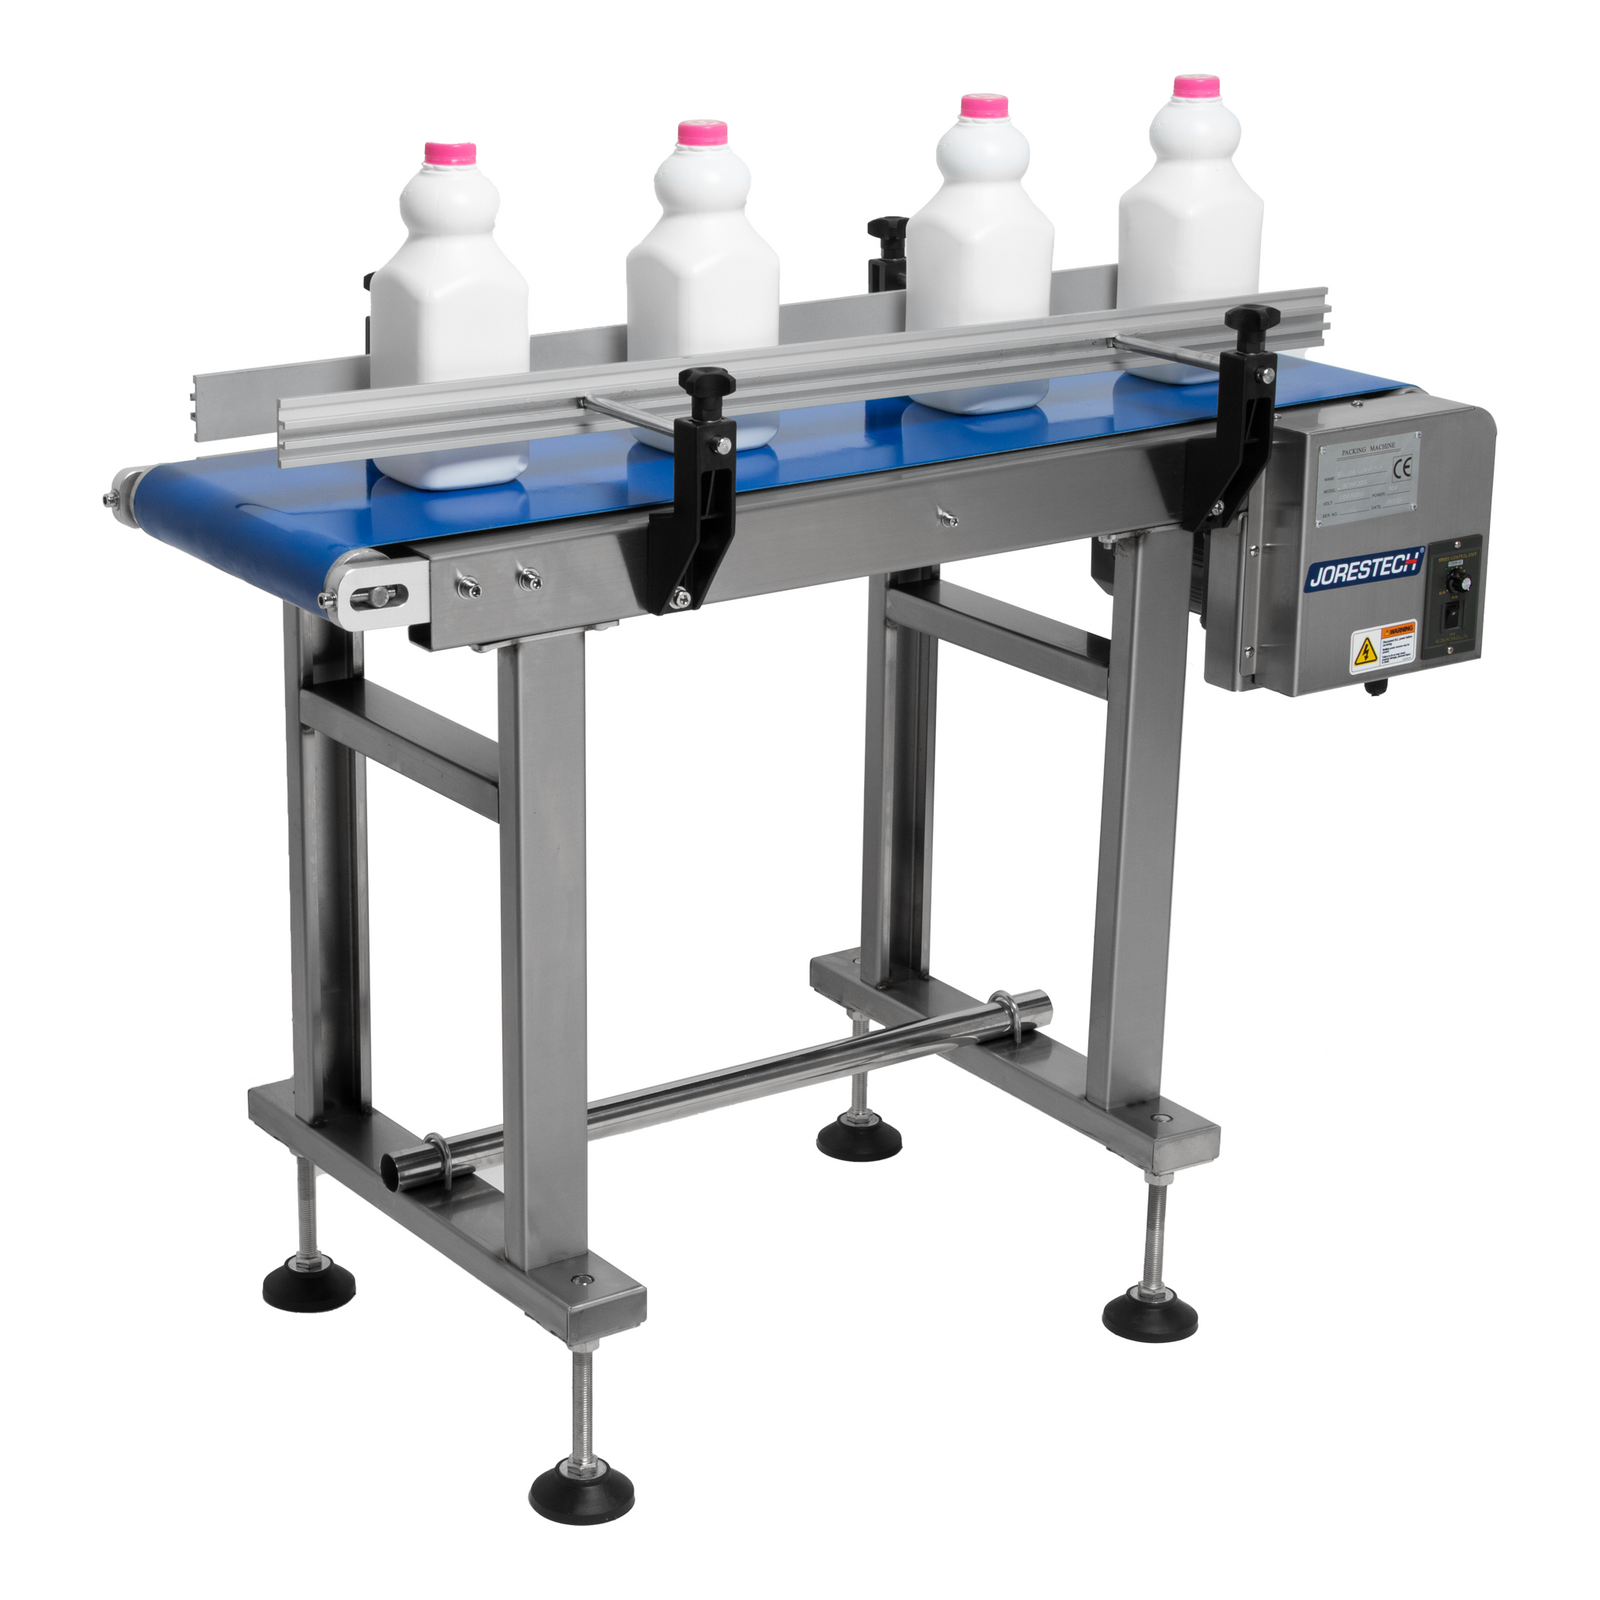 JORESTECH motorized conveyor with white milk bottles on blue belt